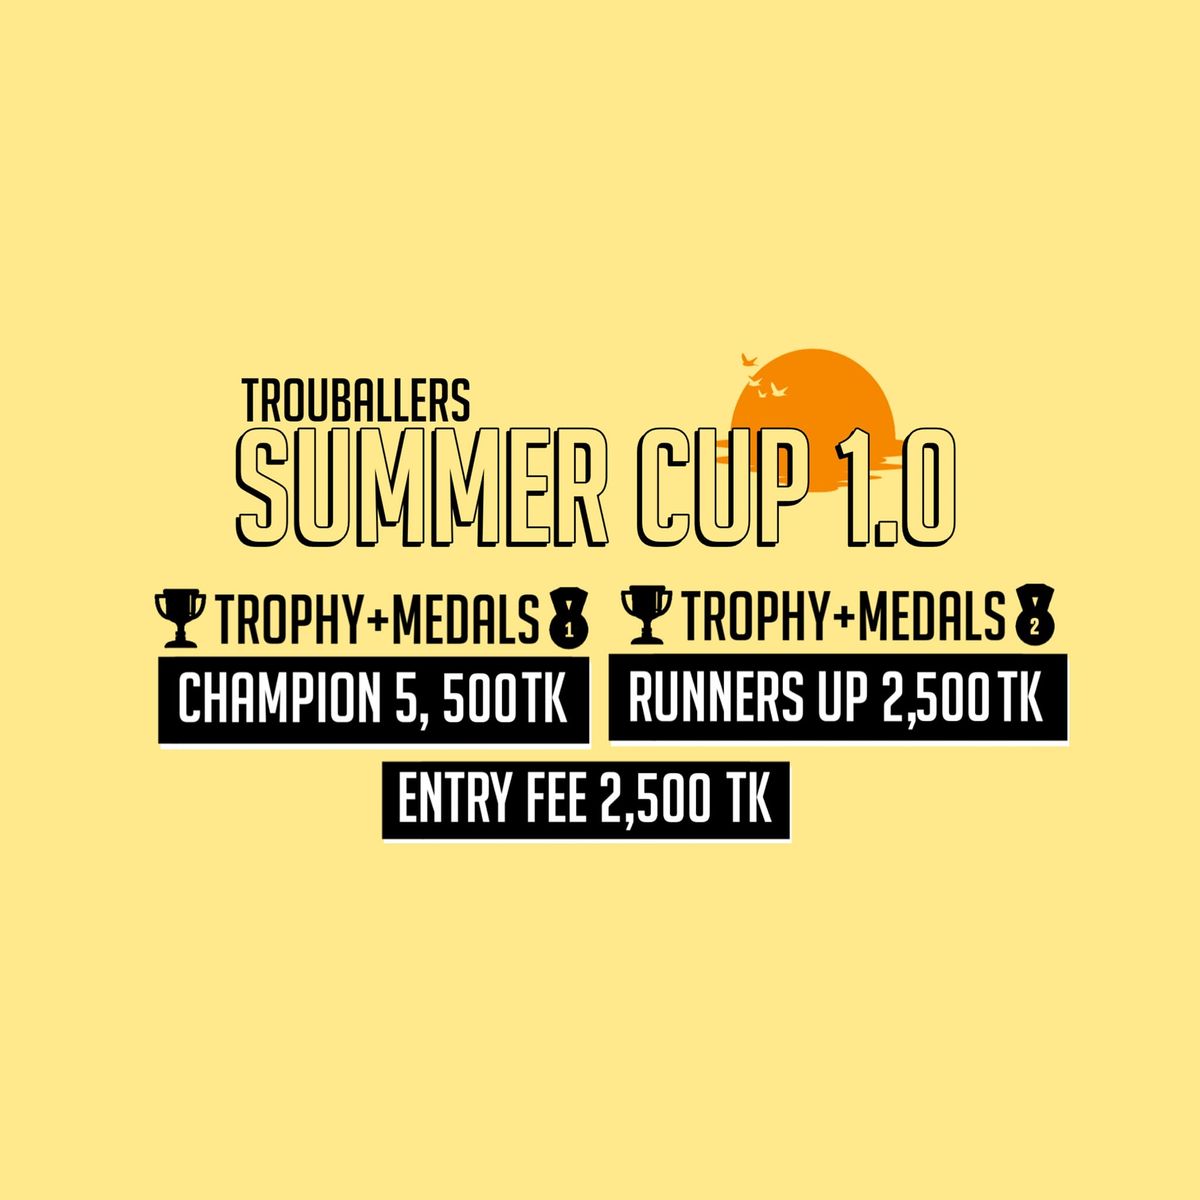 Trouballers Summer Cup 1.0